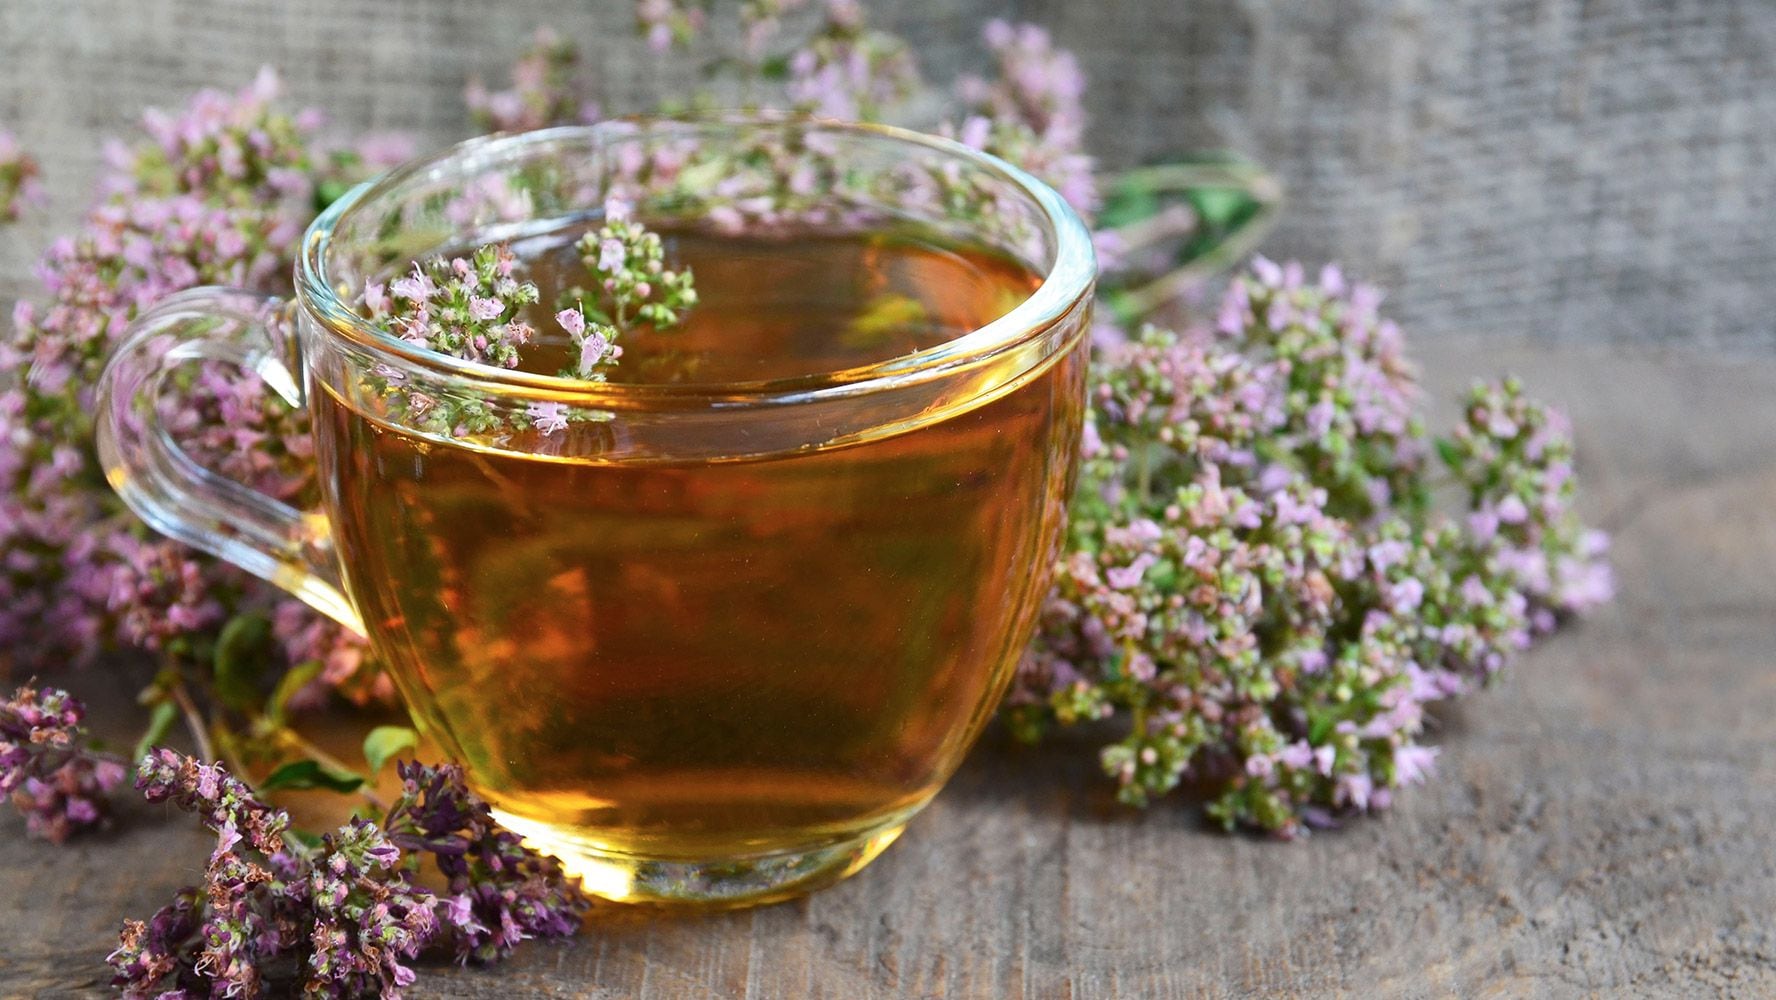 El té de orégano se prepara fresco o seco. (Foto: Shutterstock).